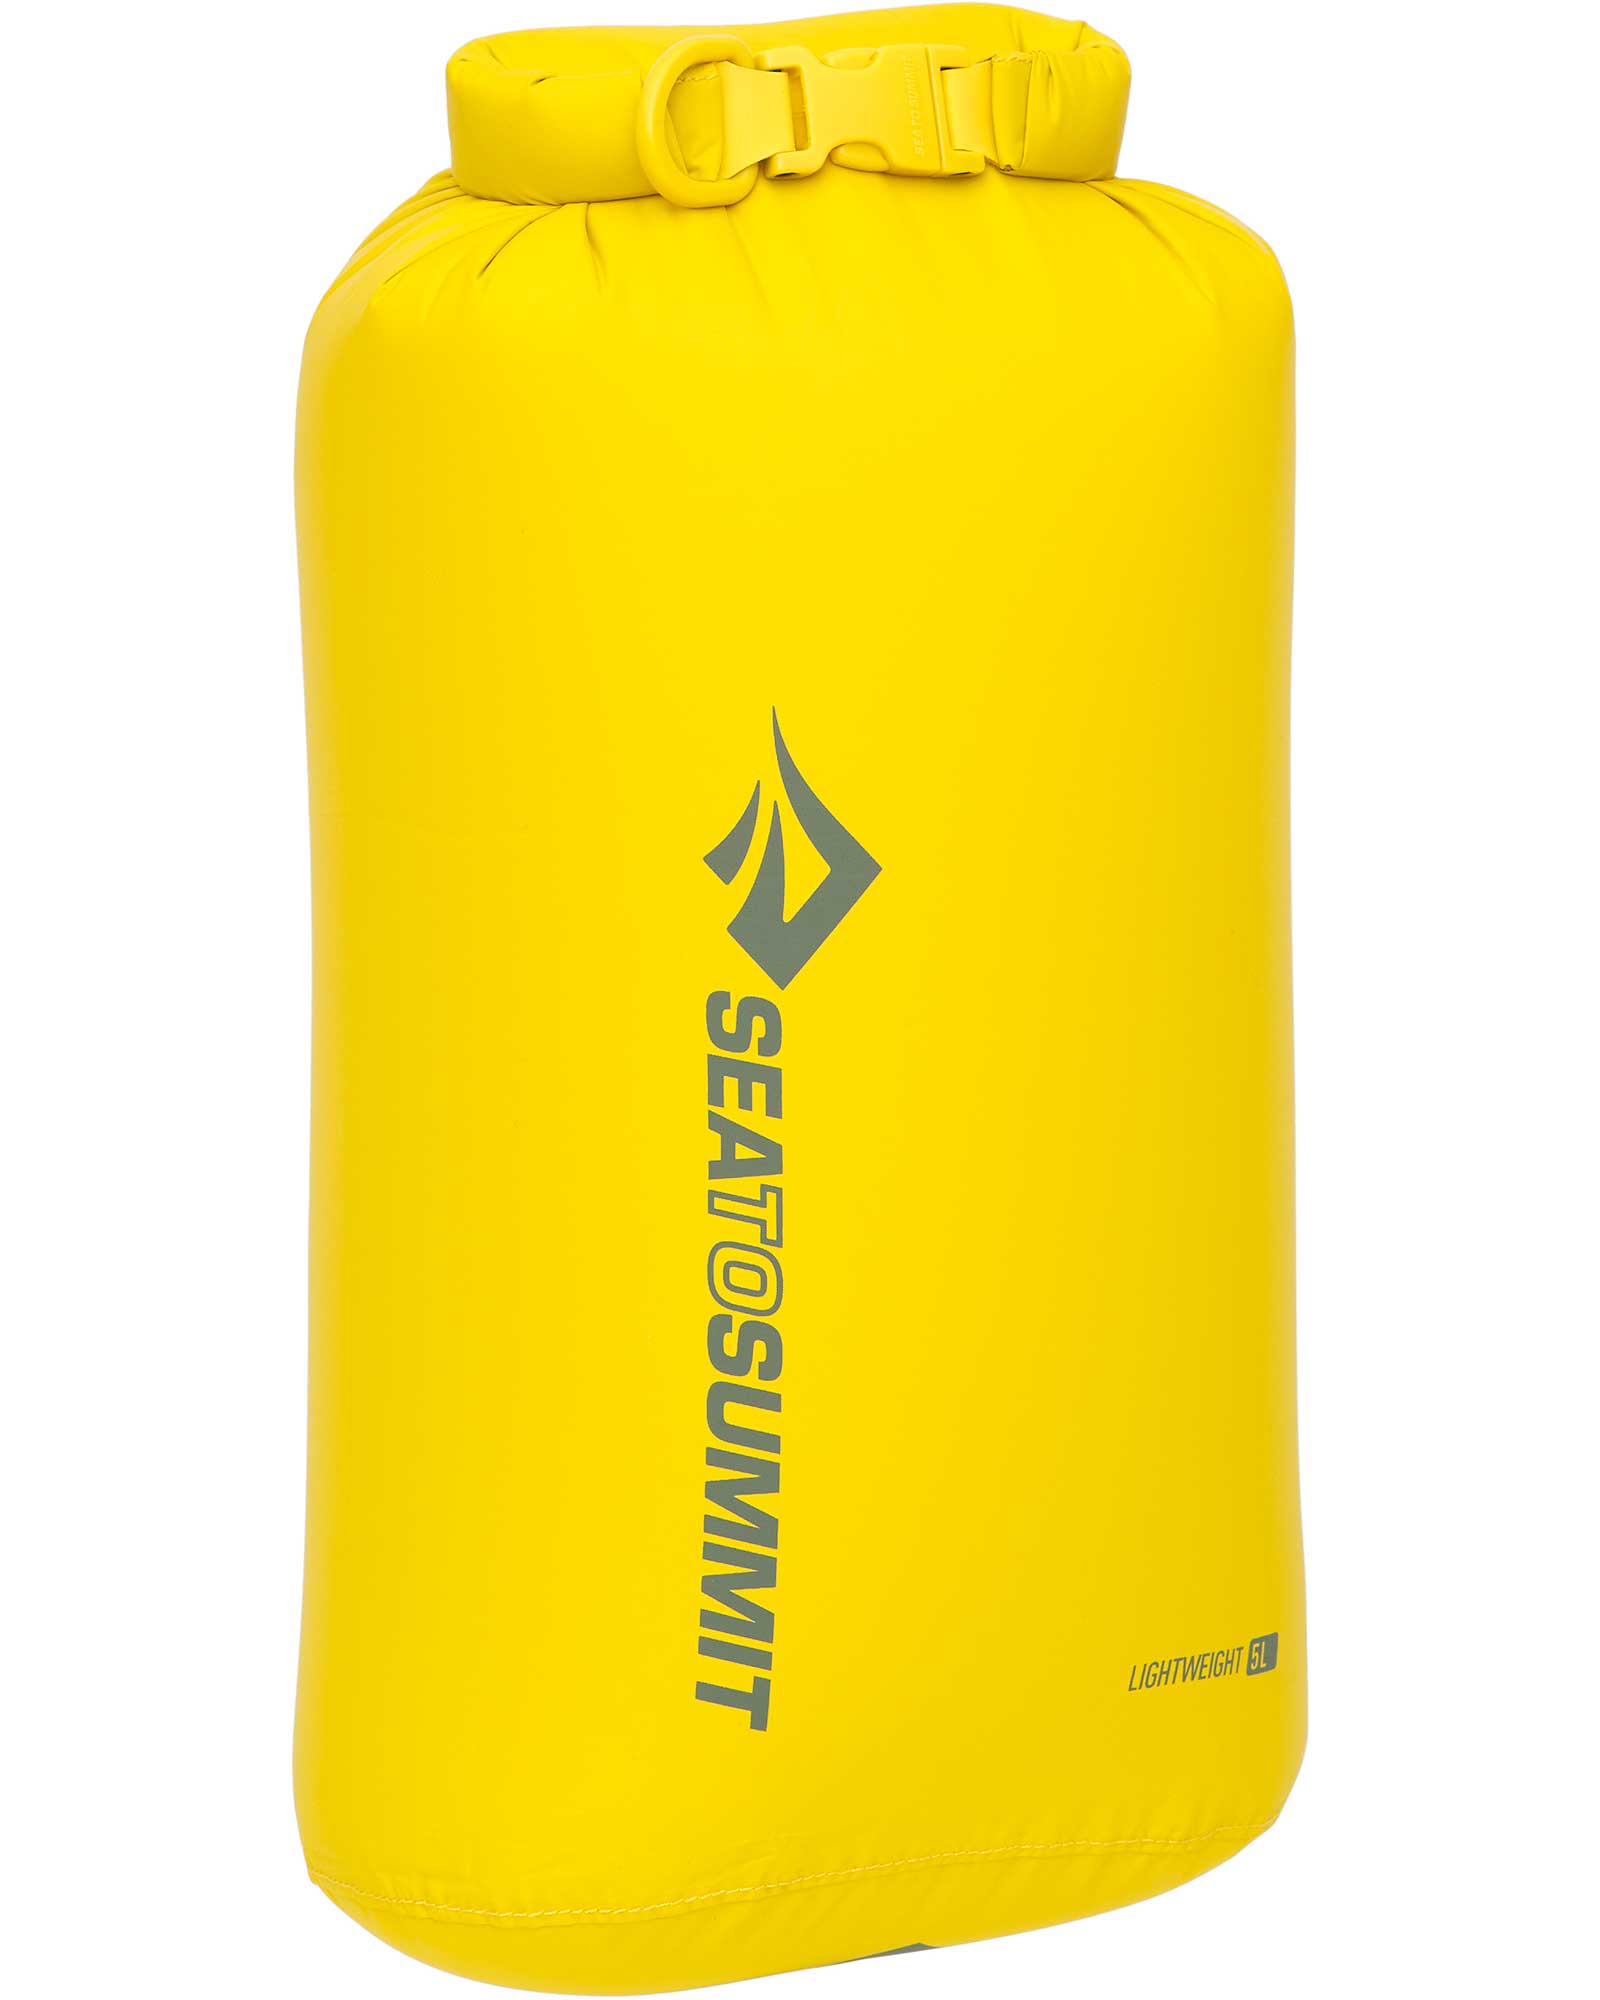 Sea to Summit Lightweight 5L Dry Bag - Sulphur